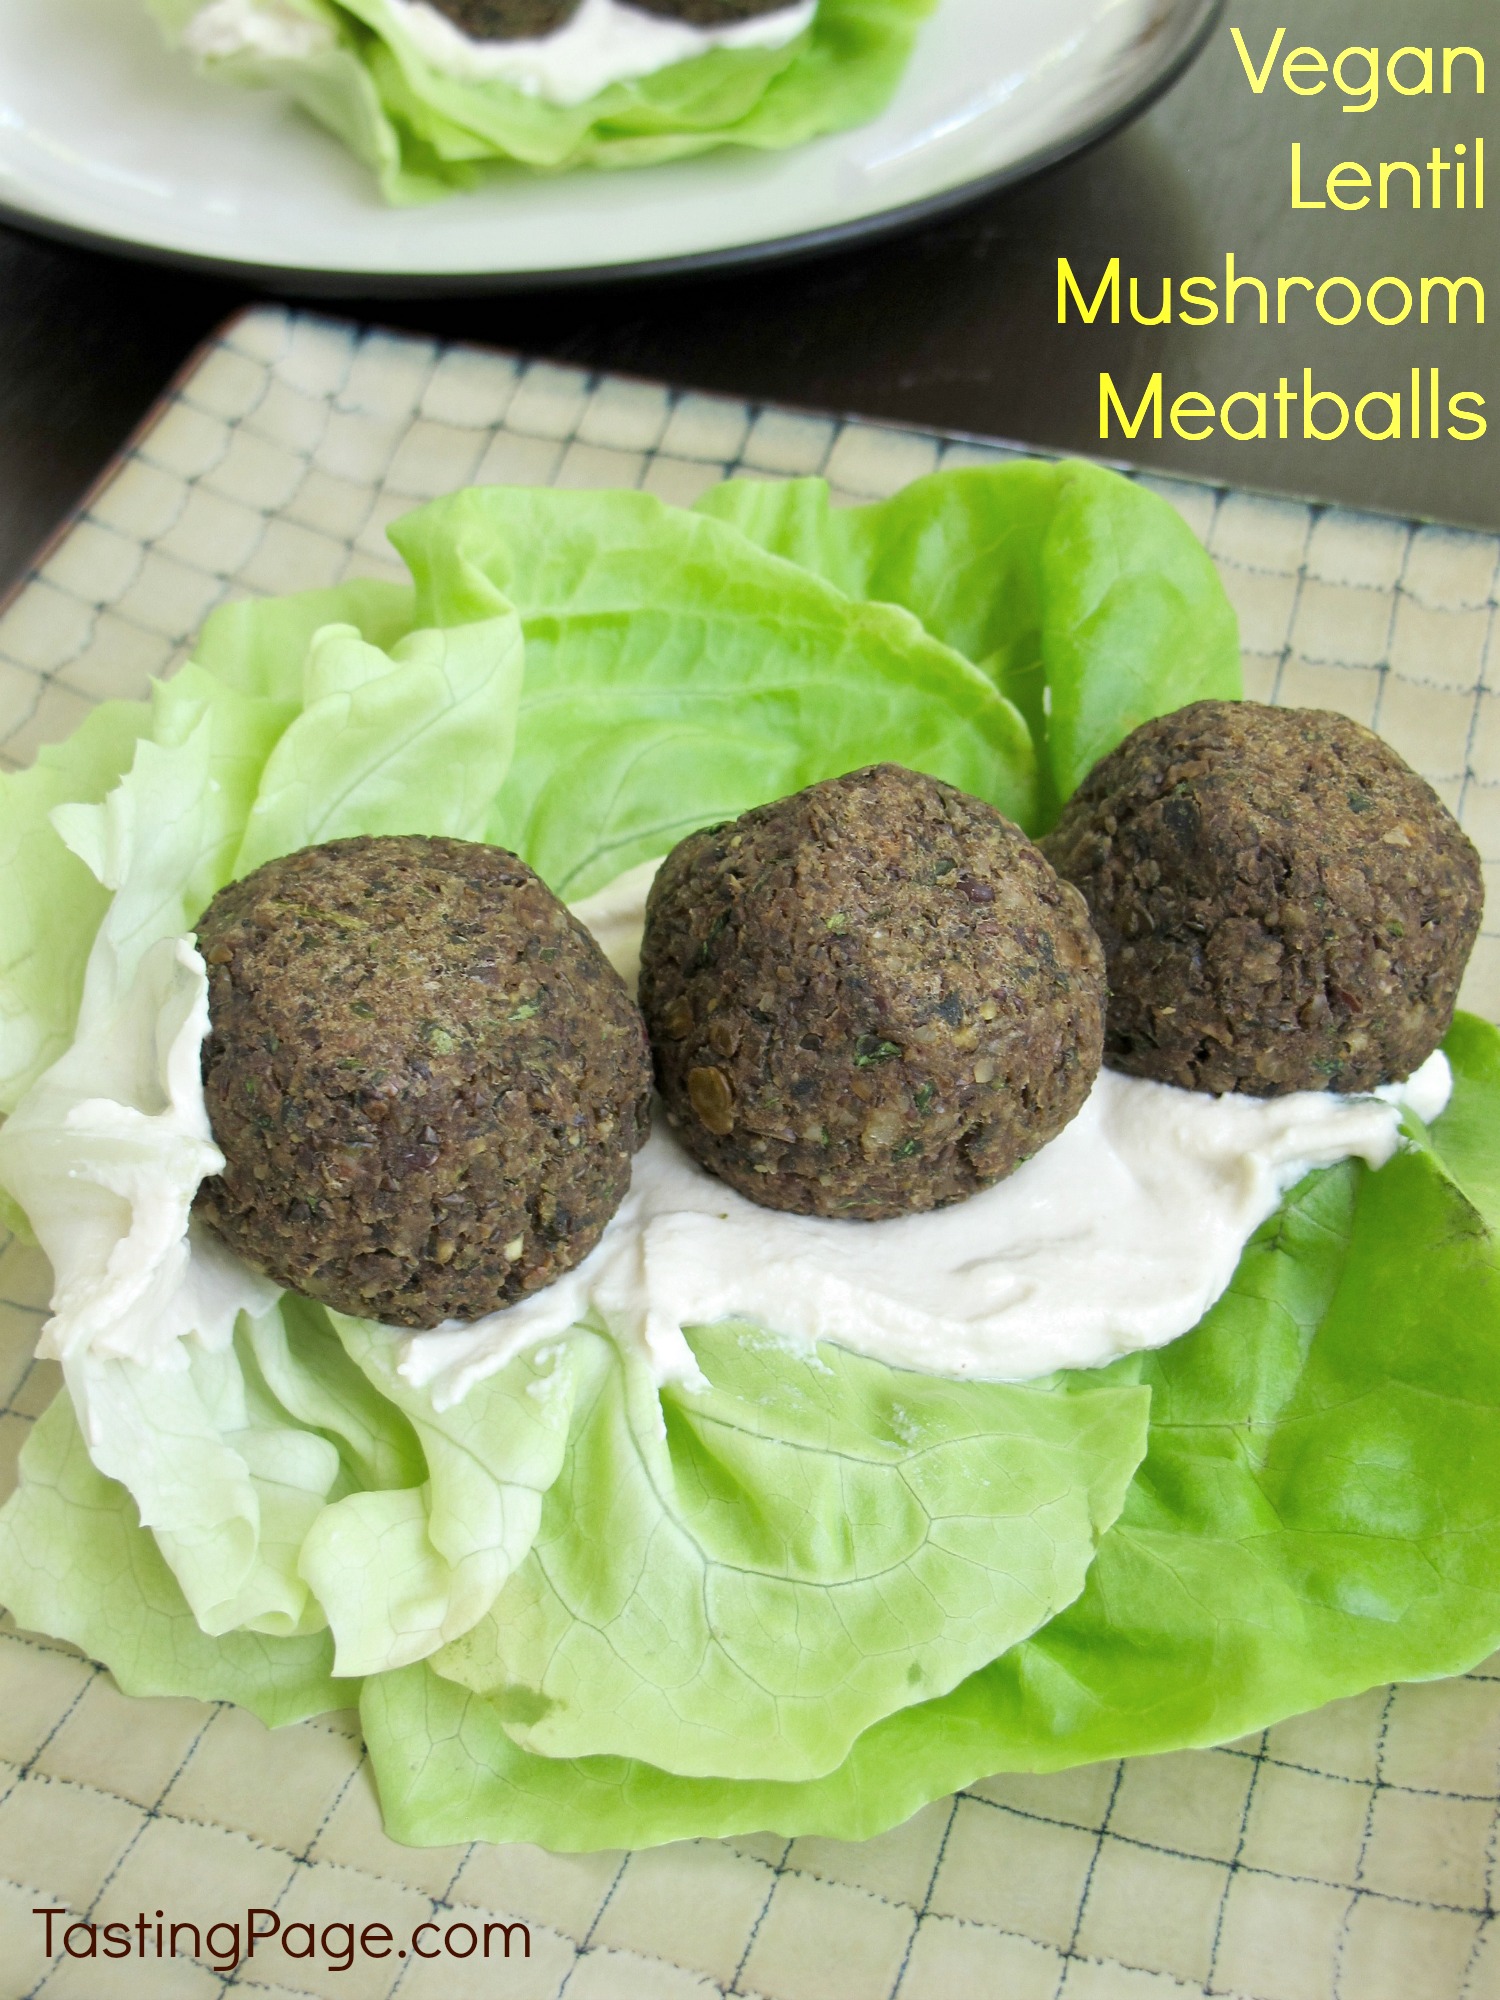 Vegan Lentil Mushroom Meatballs - a tasty meat-less meal filled with veggies - Tasting Page